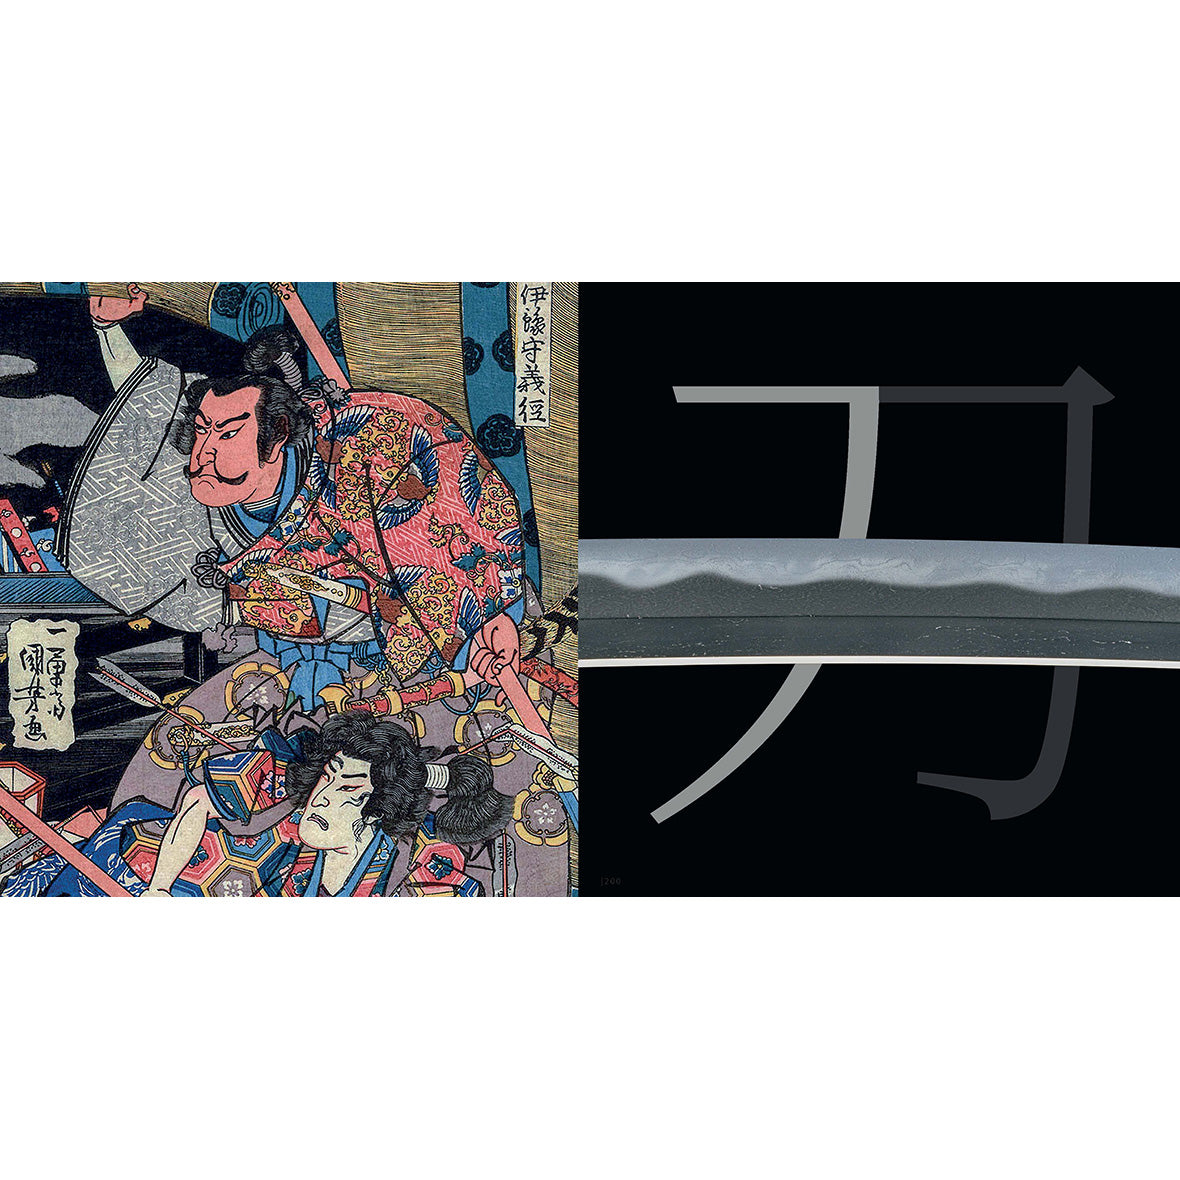 Spade e armi giapponesi dei trenta più gloriosi samurai